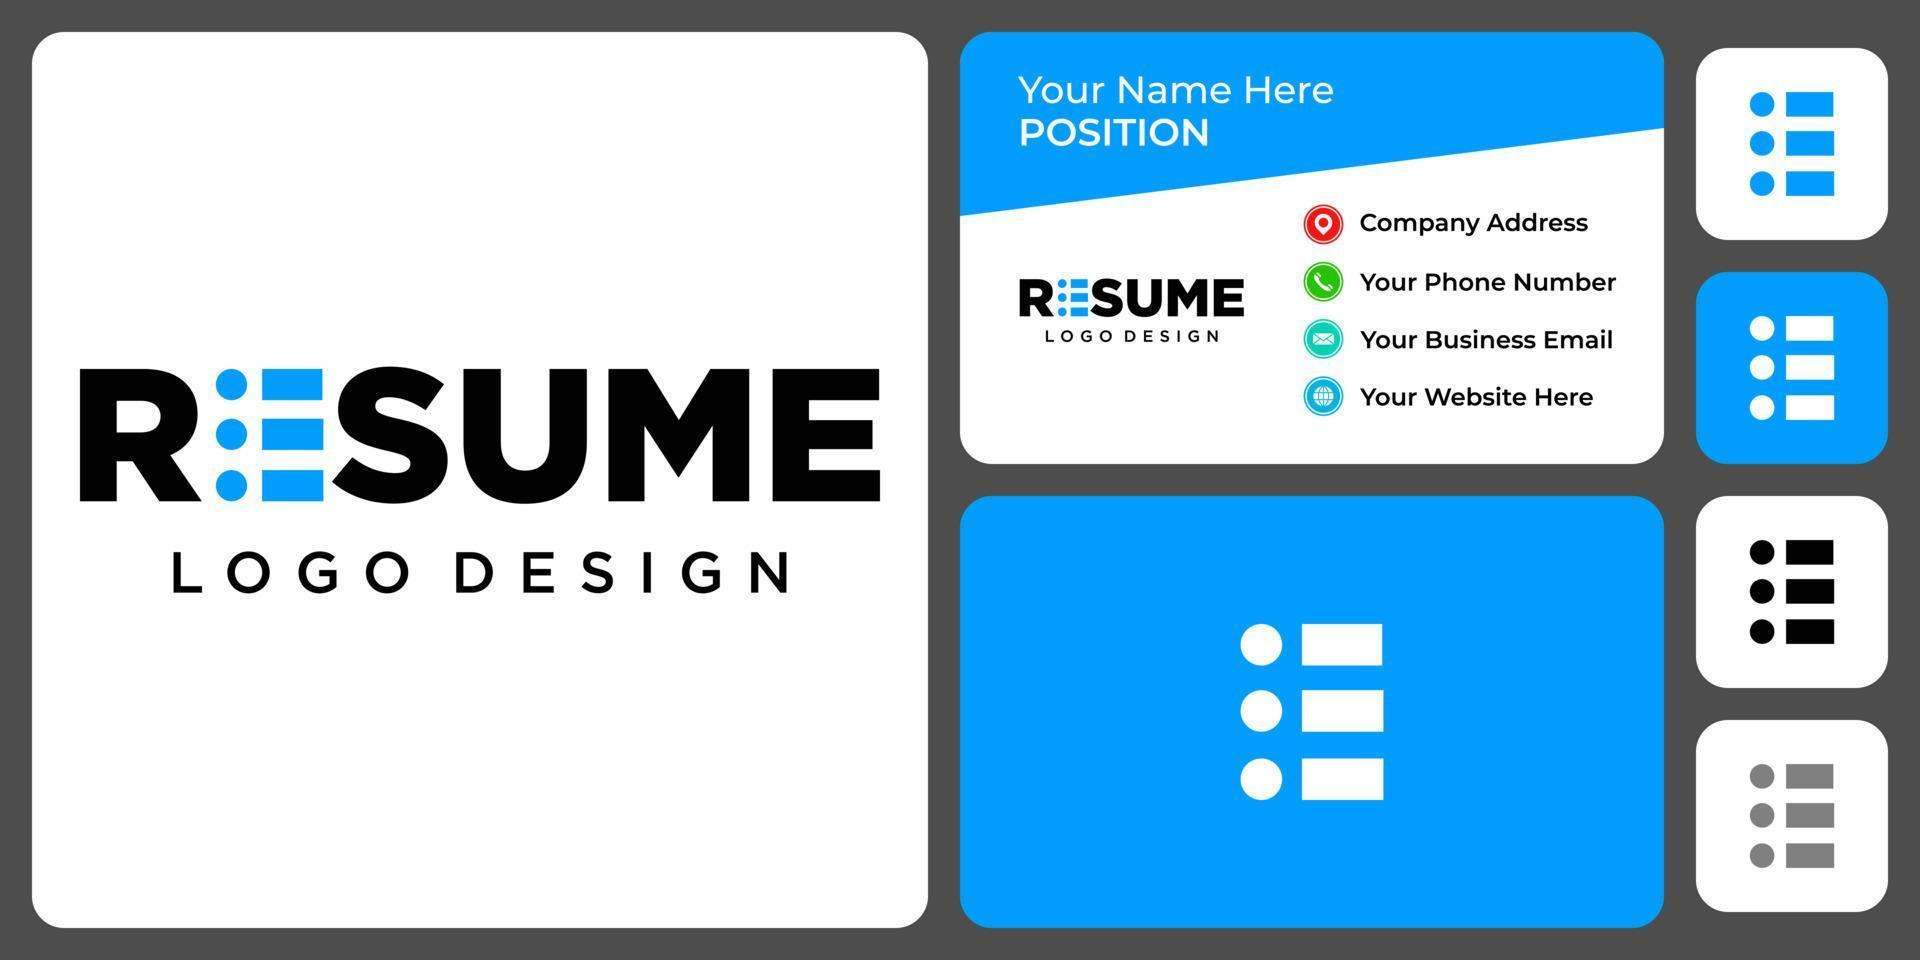 Letter E monogram resume logo design with business card template. vector